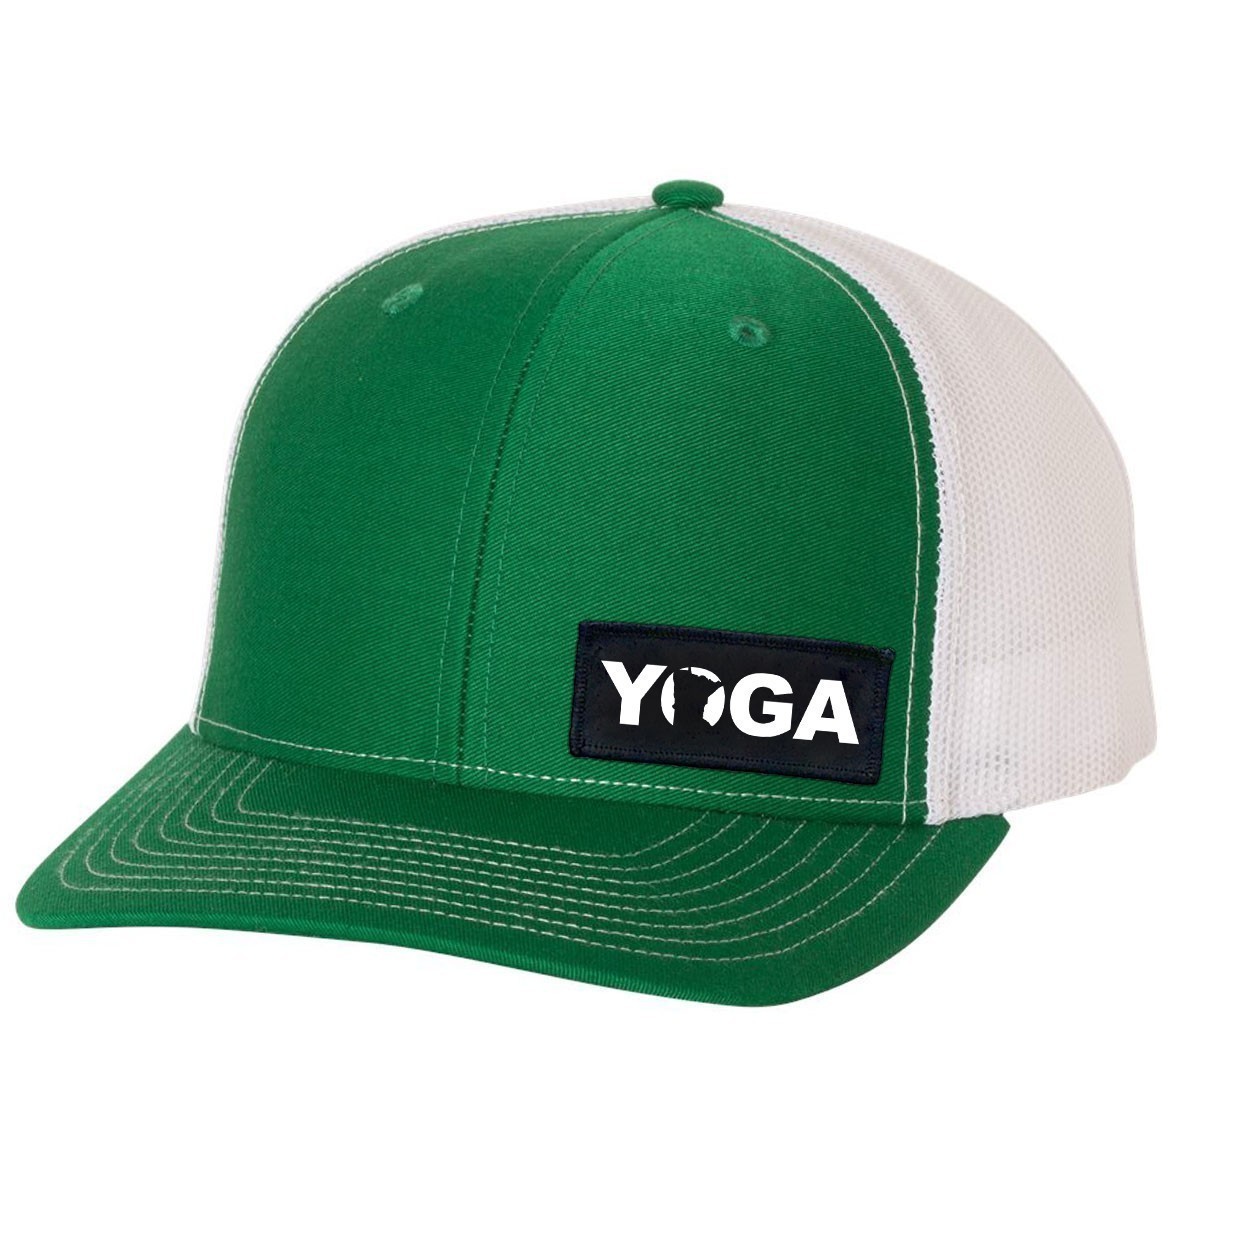 Yoga Minnesota Night Out Woven Patch Snapback Trucker Hat Green/White (White Logo)